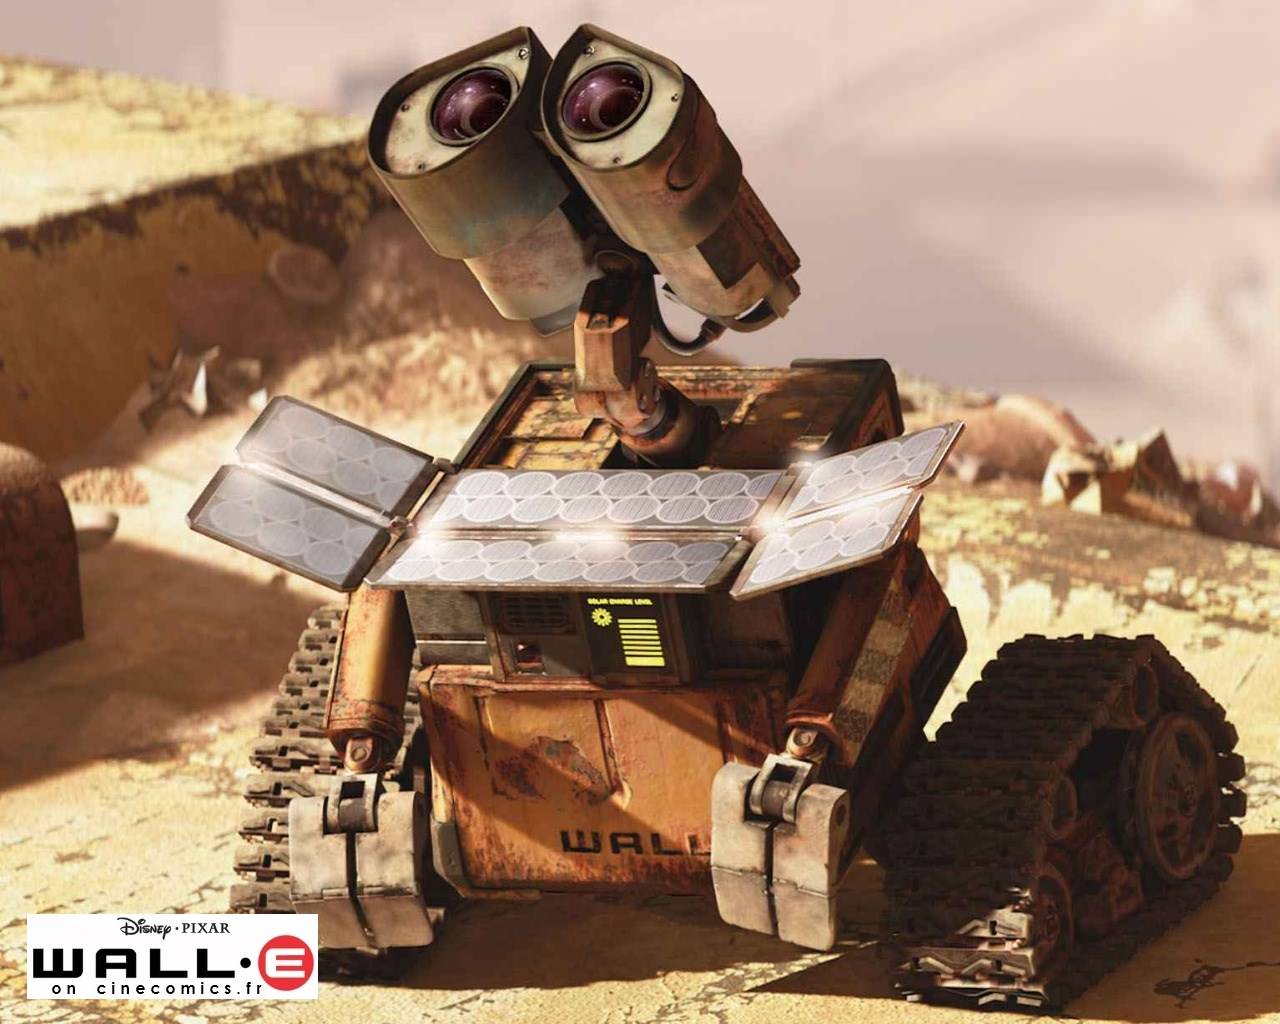  Wall E Wall-e le nouvau robot de pixar